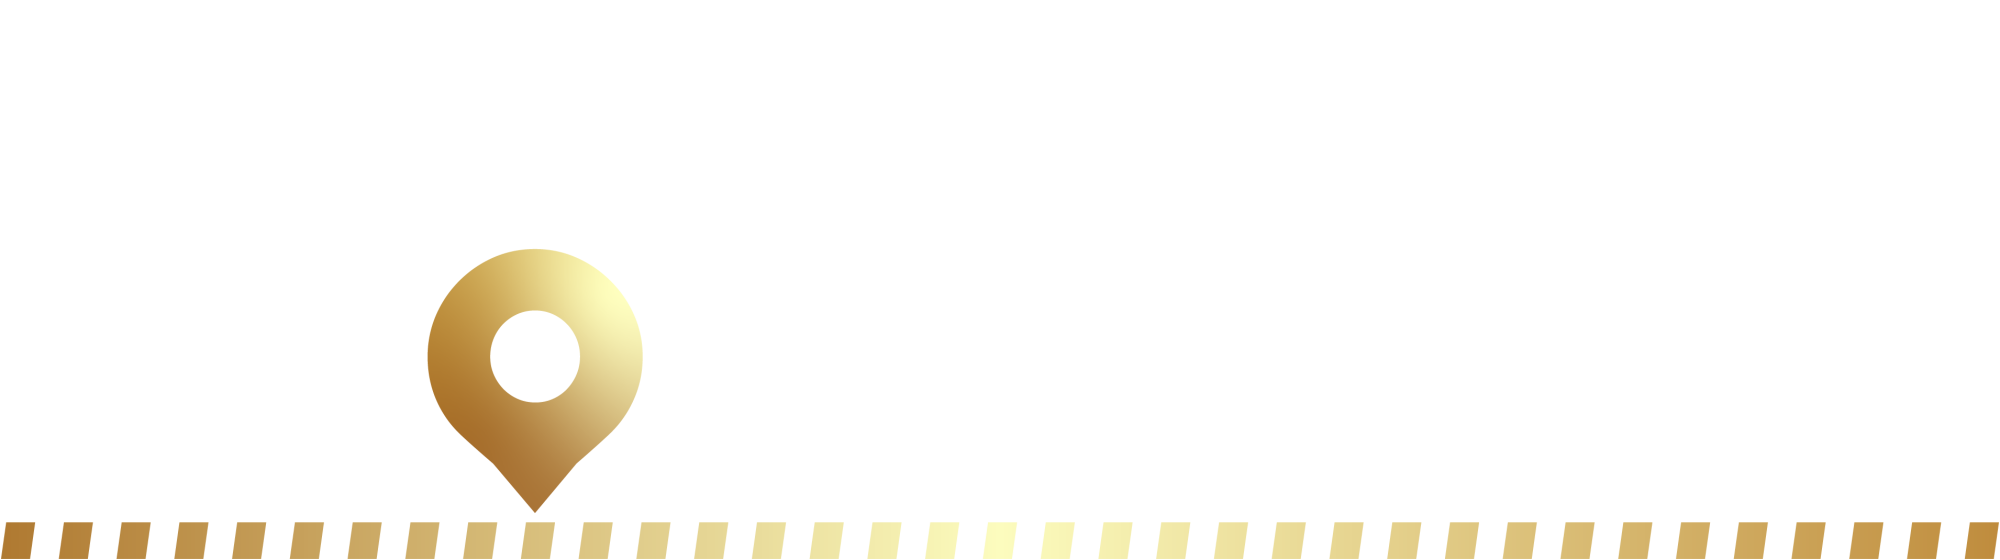 Executive Airport Transfers Logo